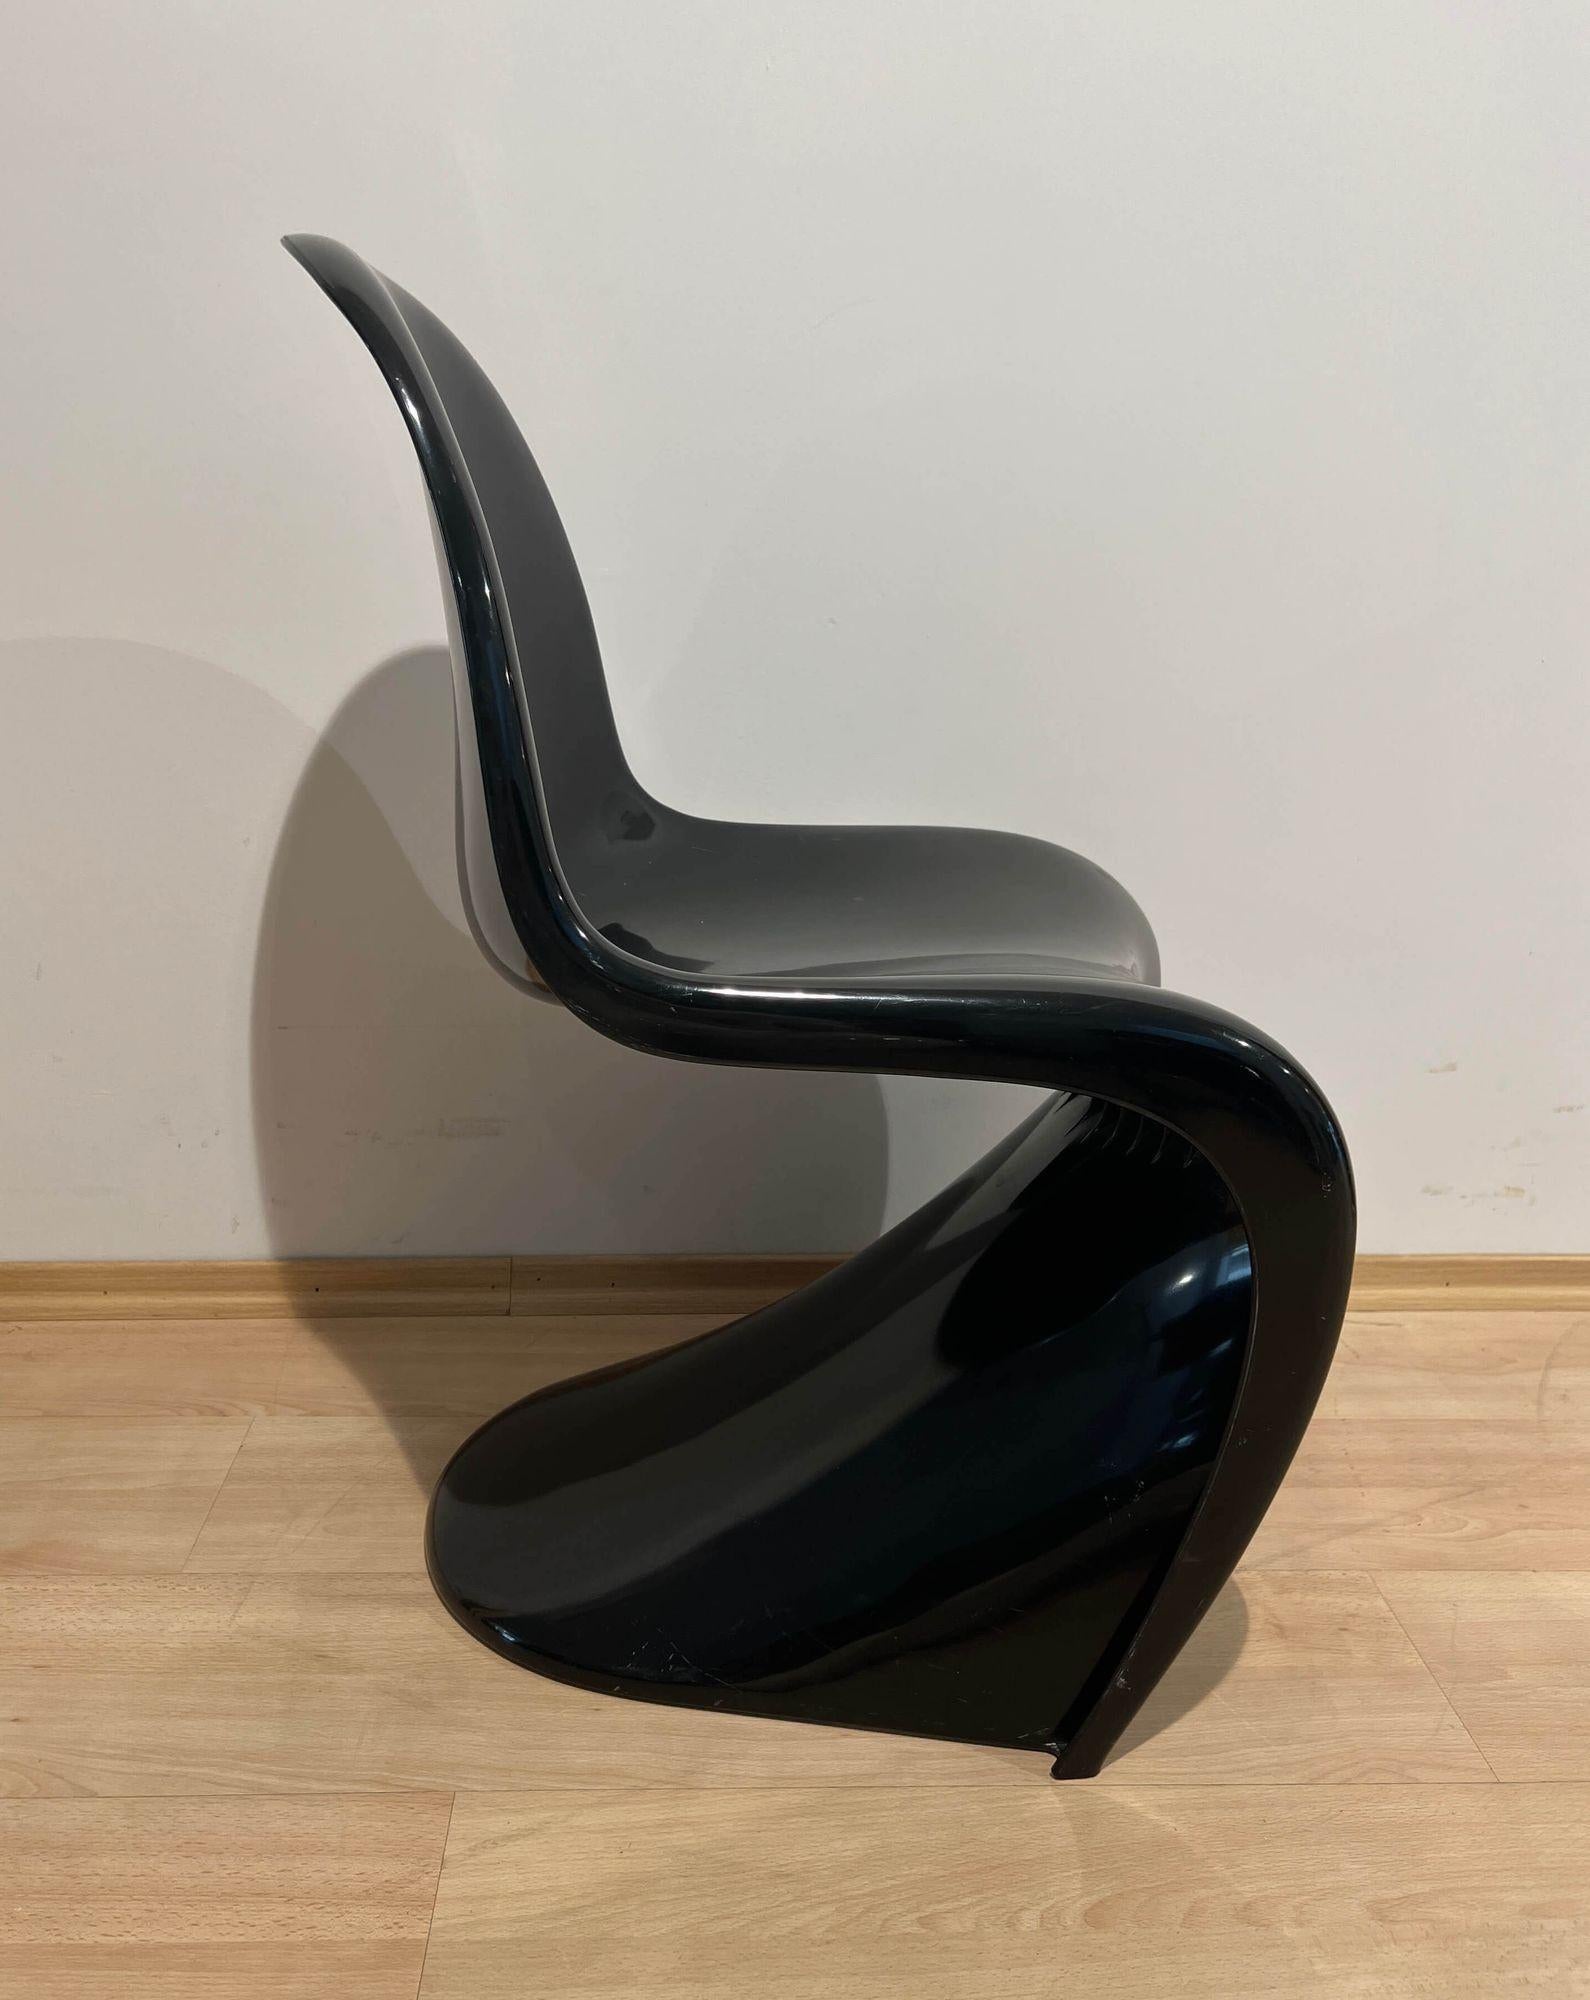 Verner Panton ‚Panton’ Cantilever Chair in Black Pu, Germany, 1971 For Sale 3